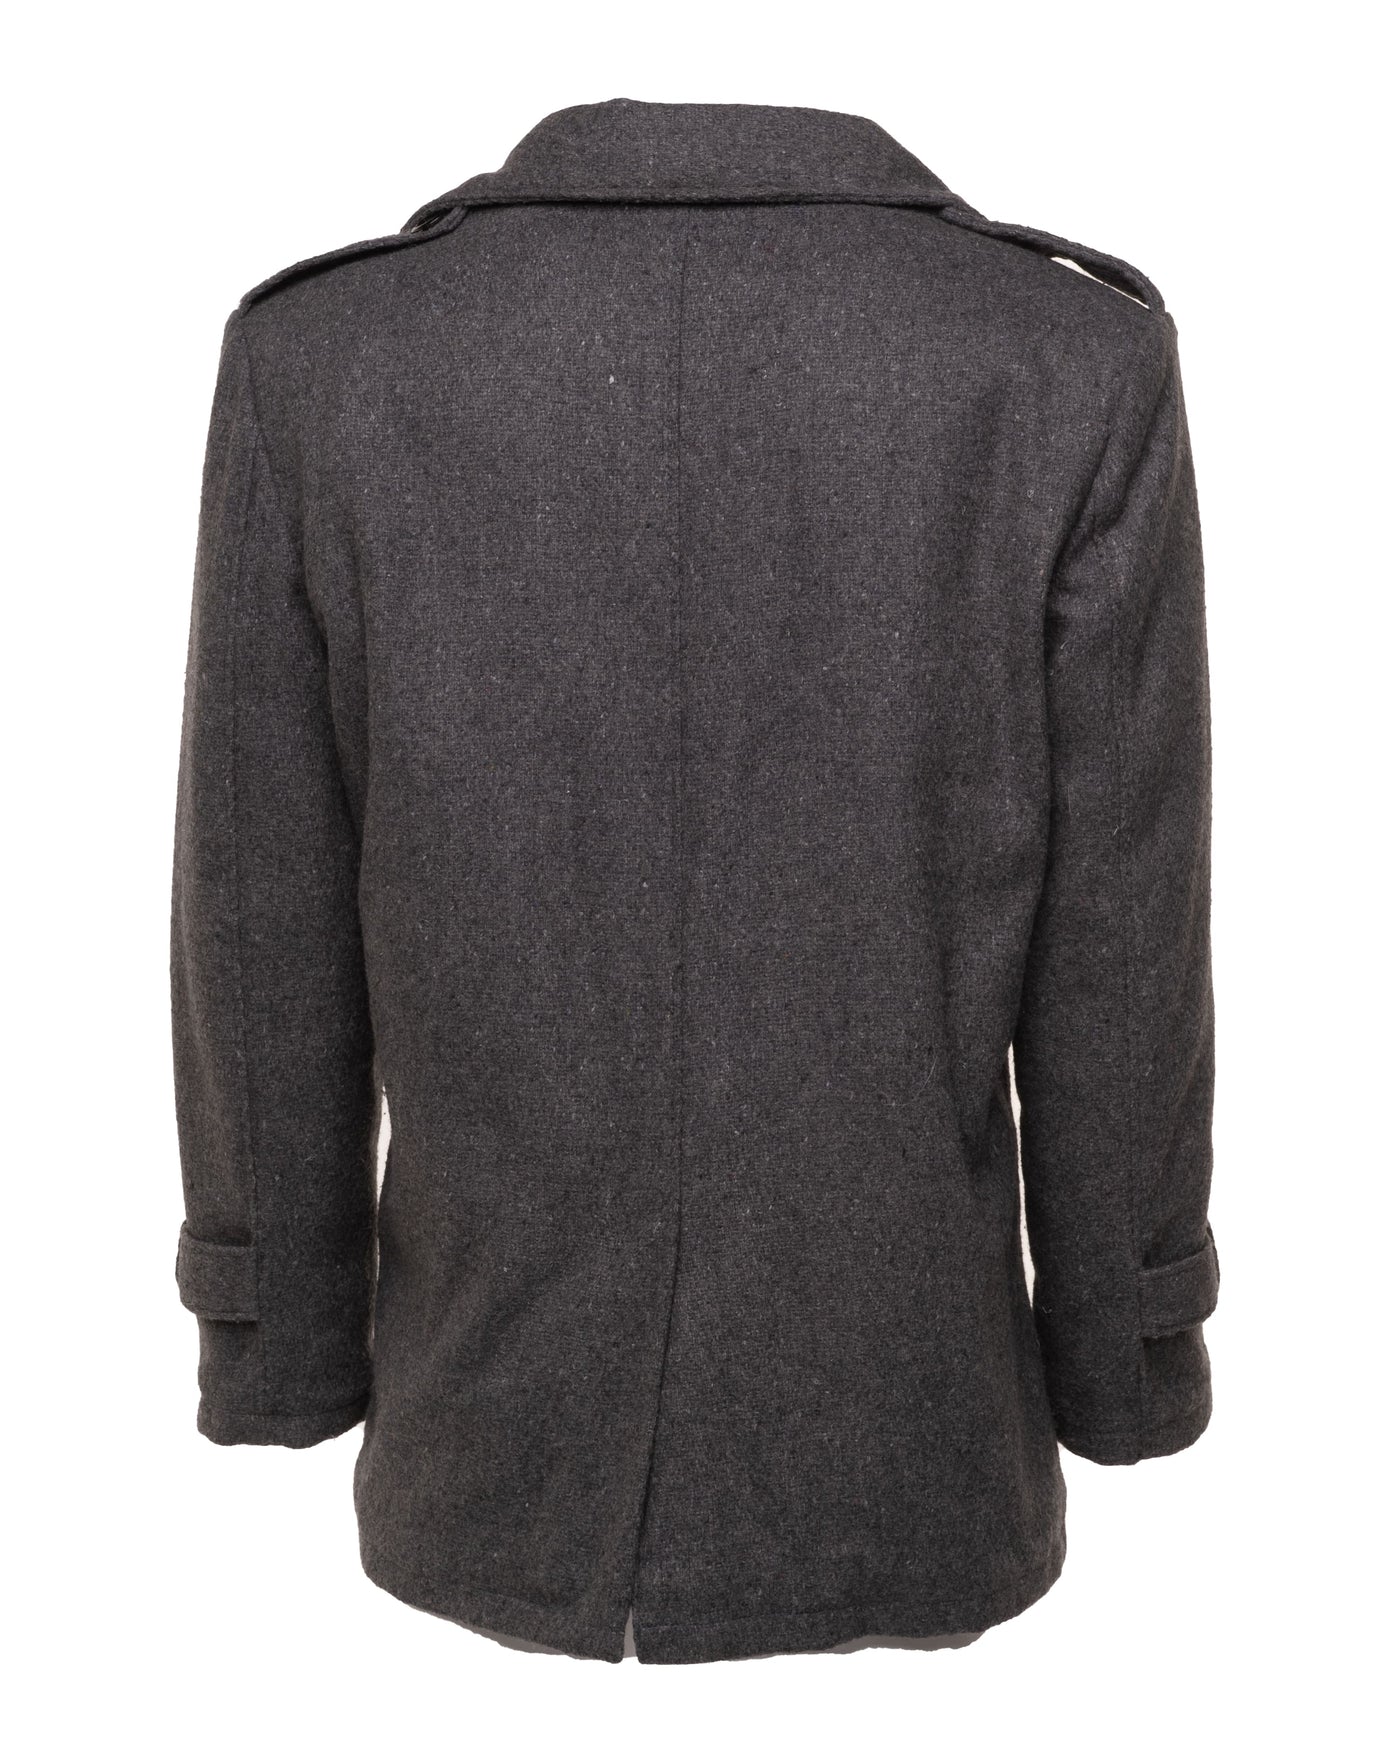 Deon John's Grey Wool Long Coat with Epaulettes